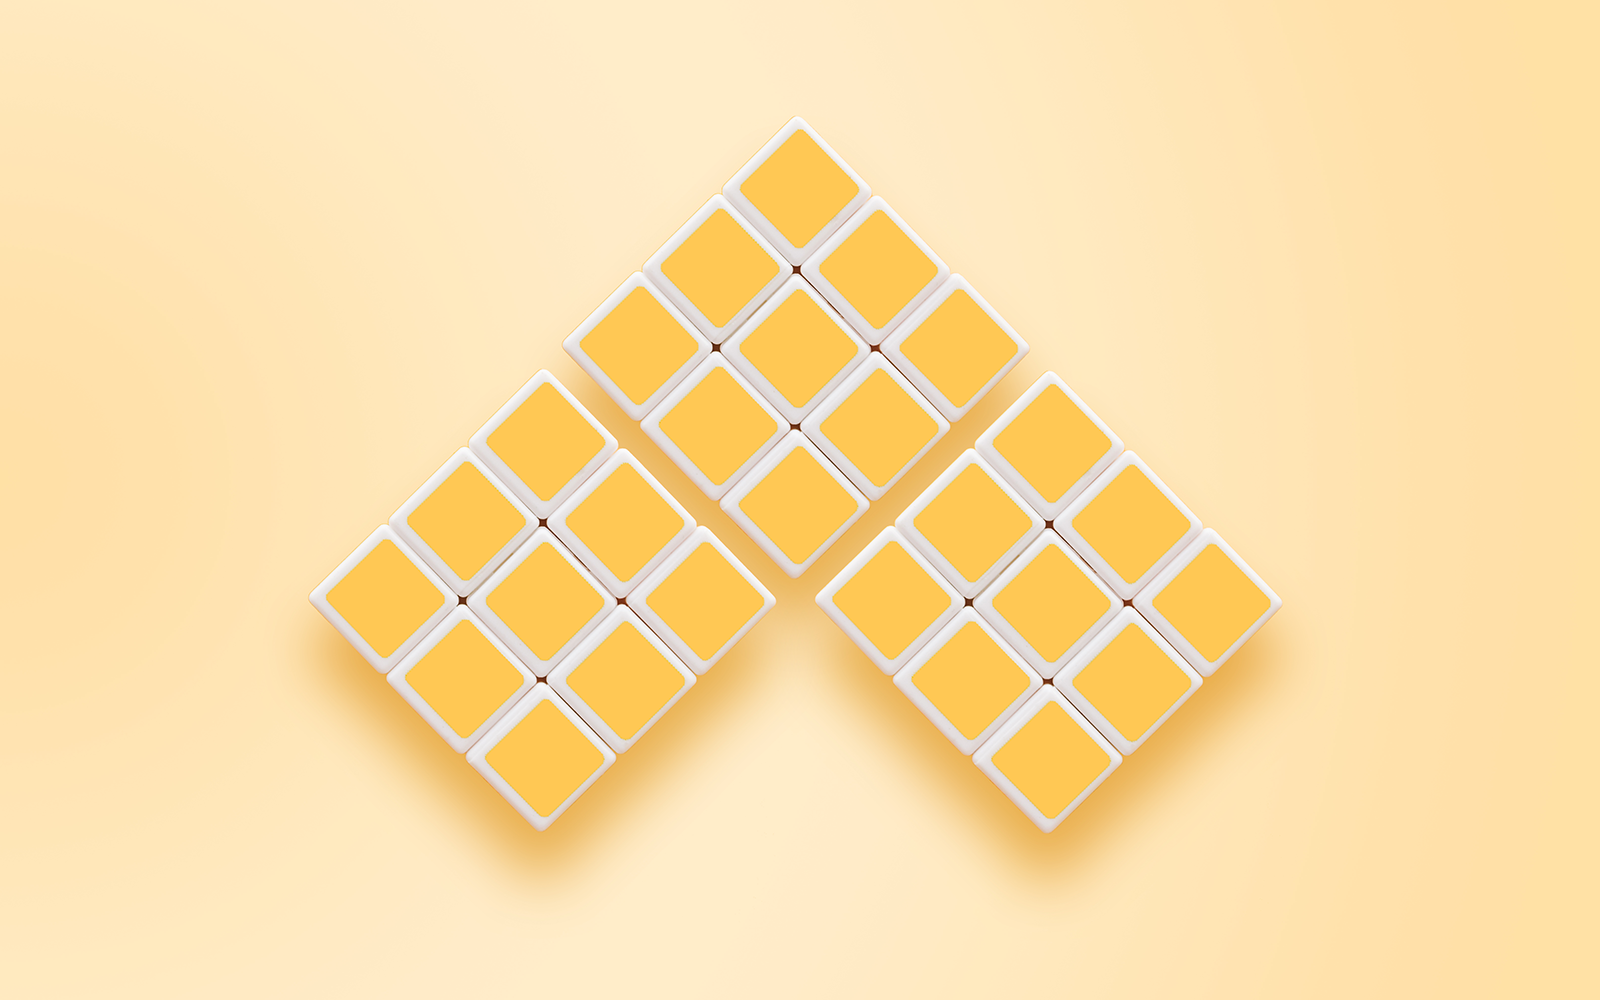 3 yellow rubics cubes